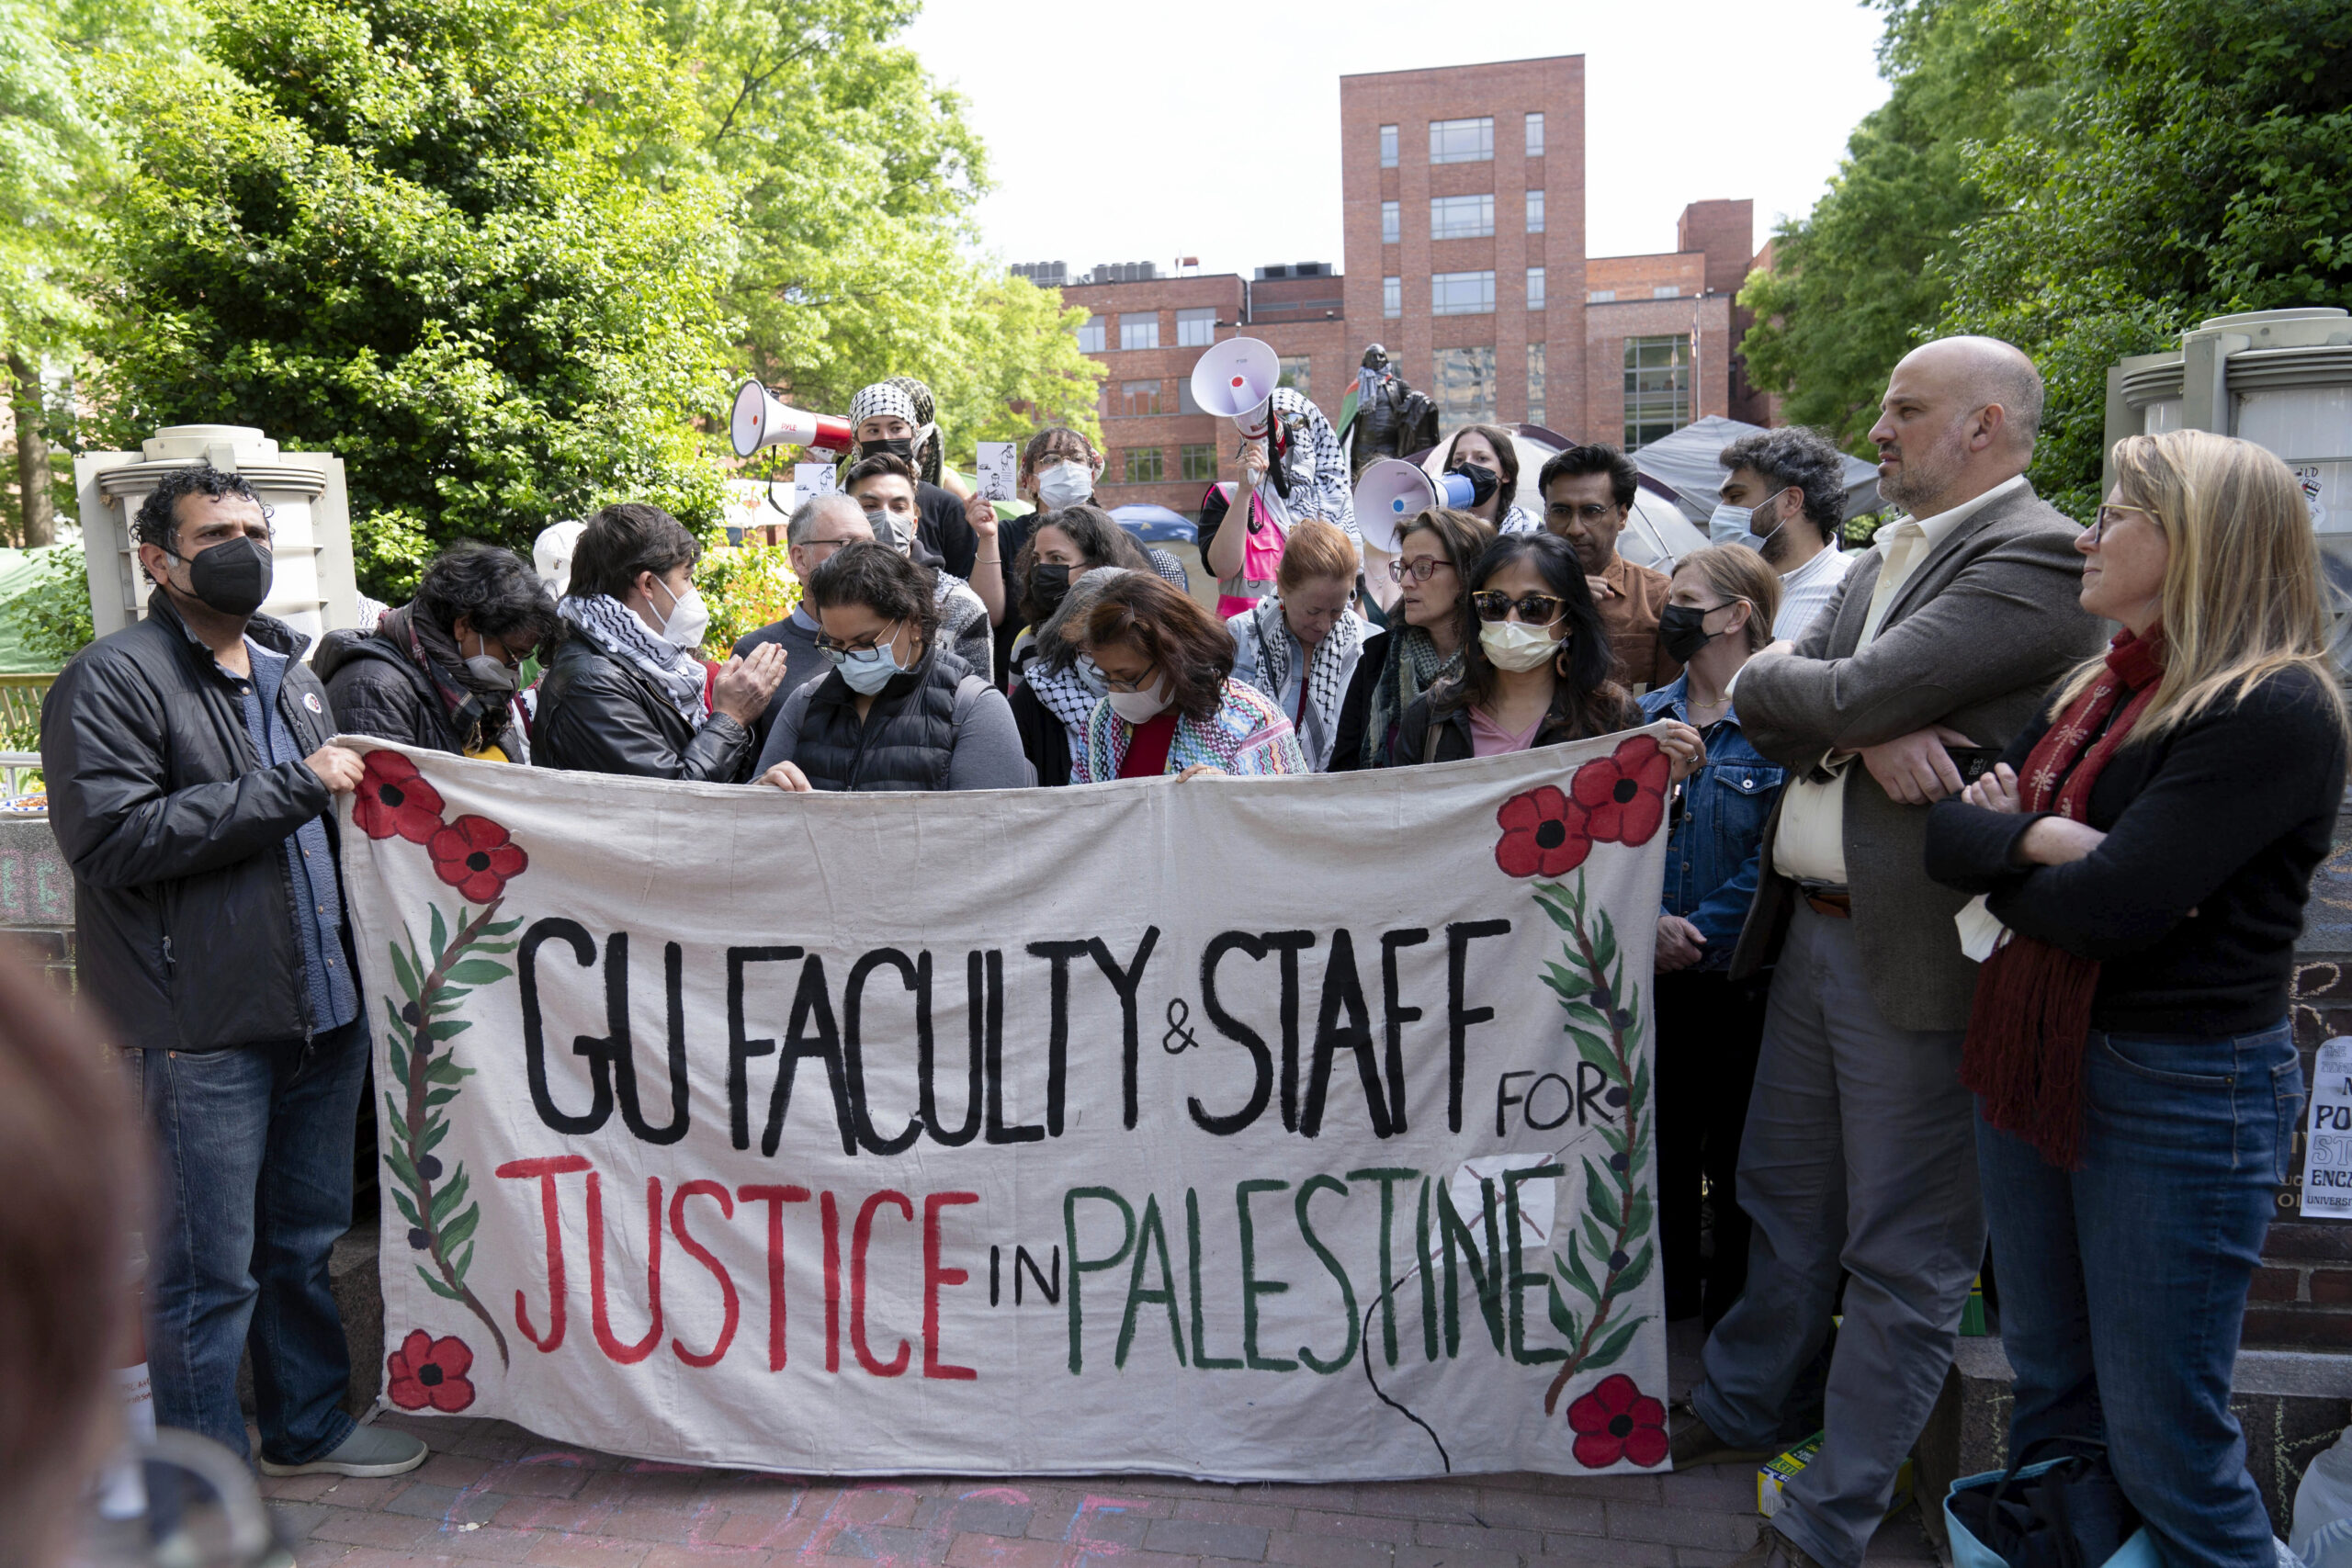 NextImg:George Washington University poised for showdown with pro-Palestinian protesters in nation’s capital - Washington Examiner